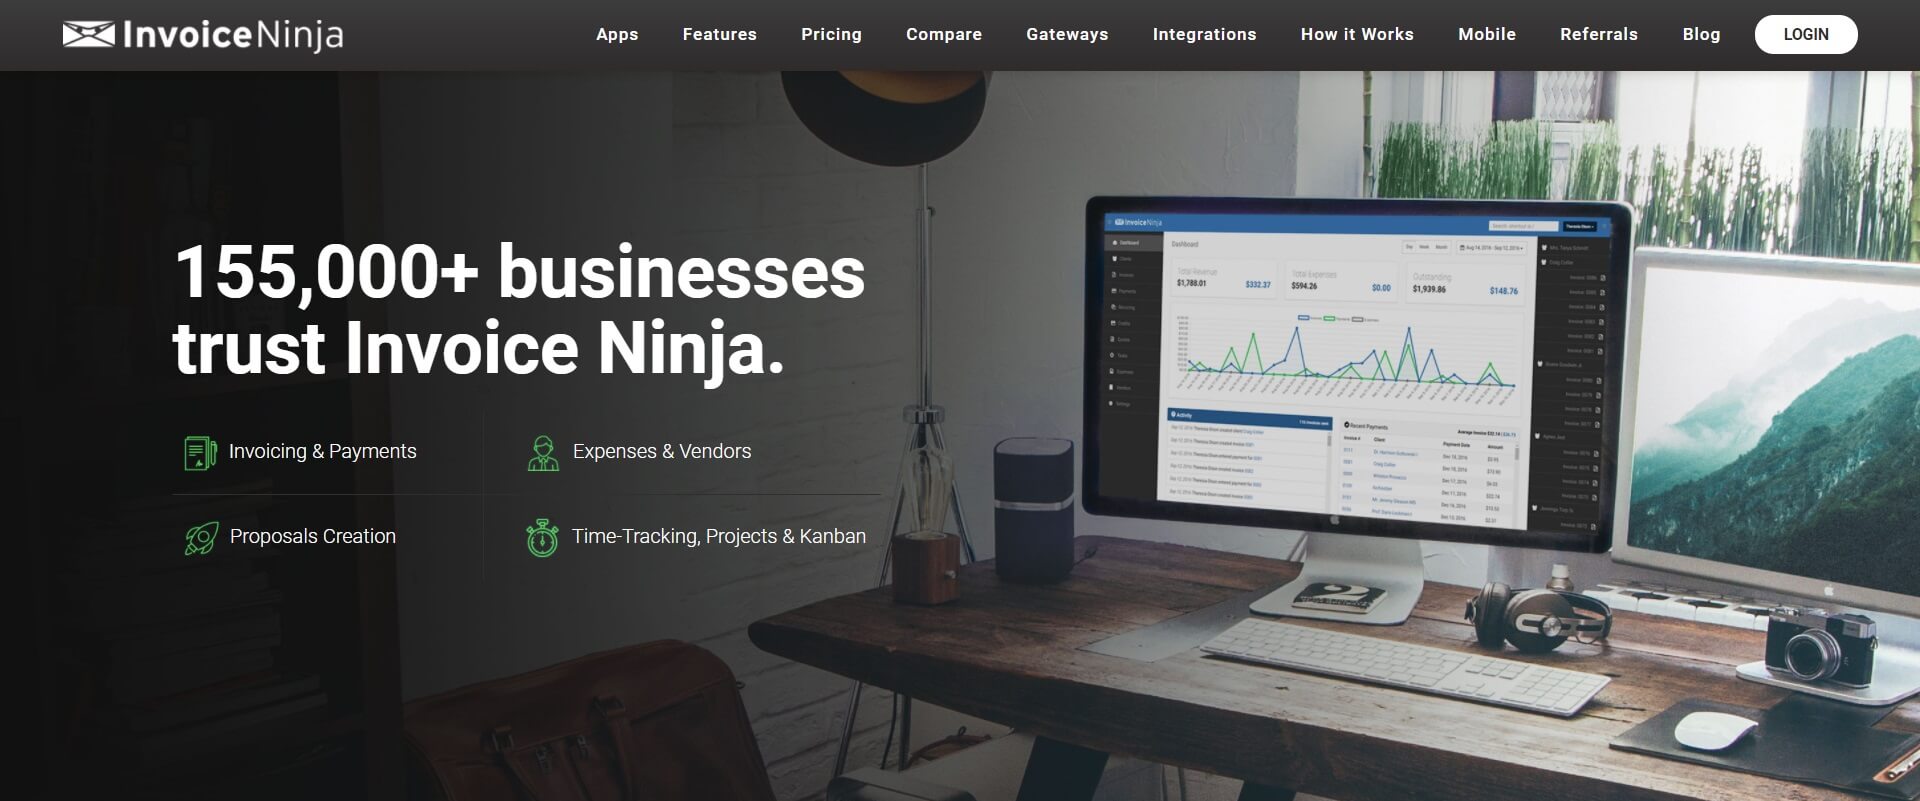 invoice ninja main web banner